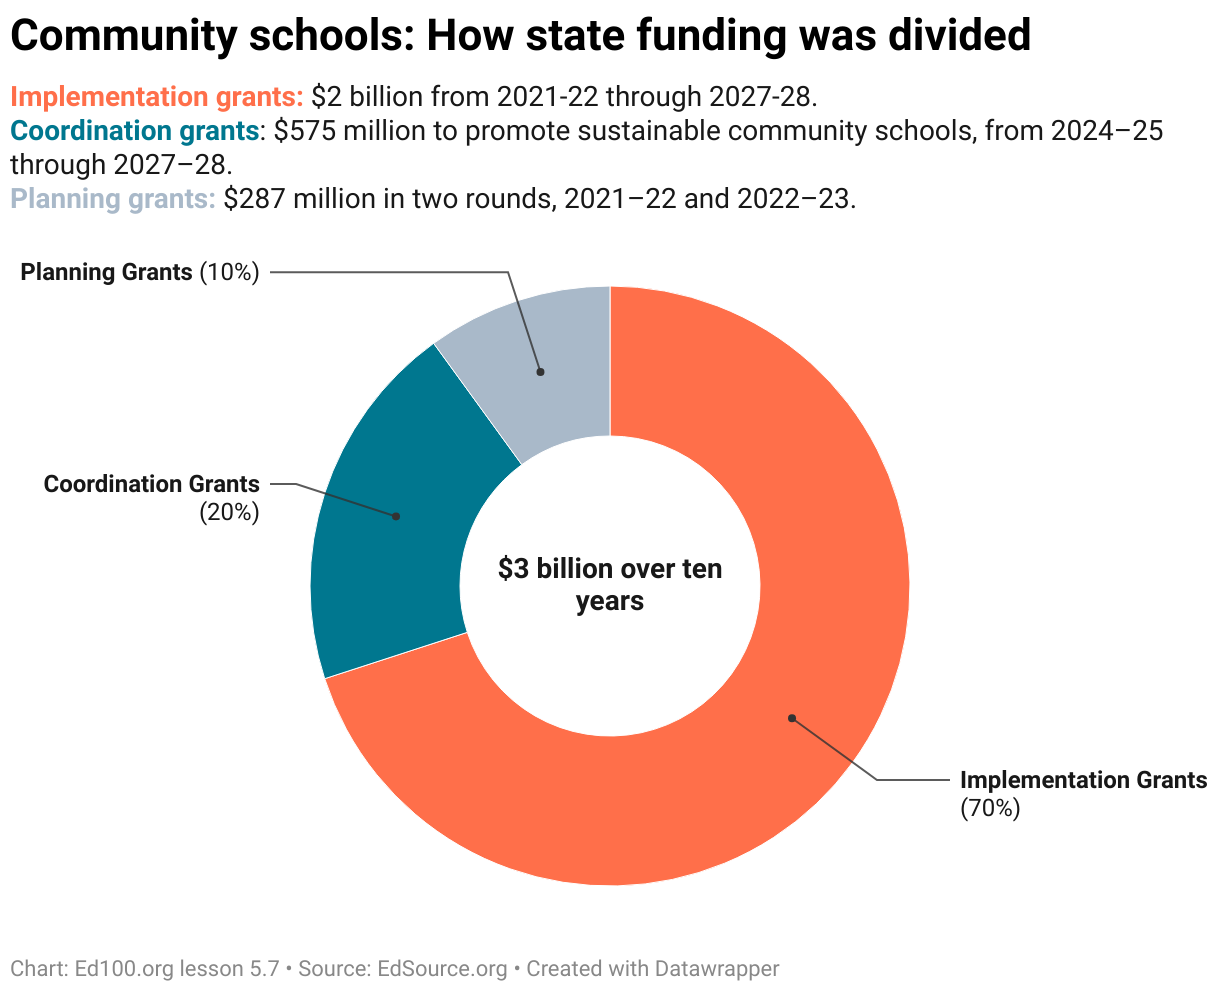 Community School funding in California